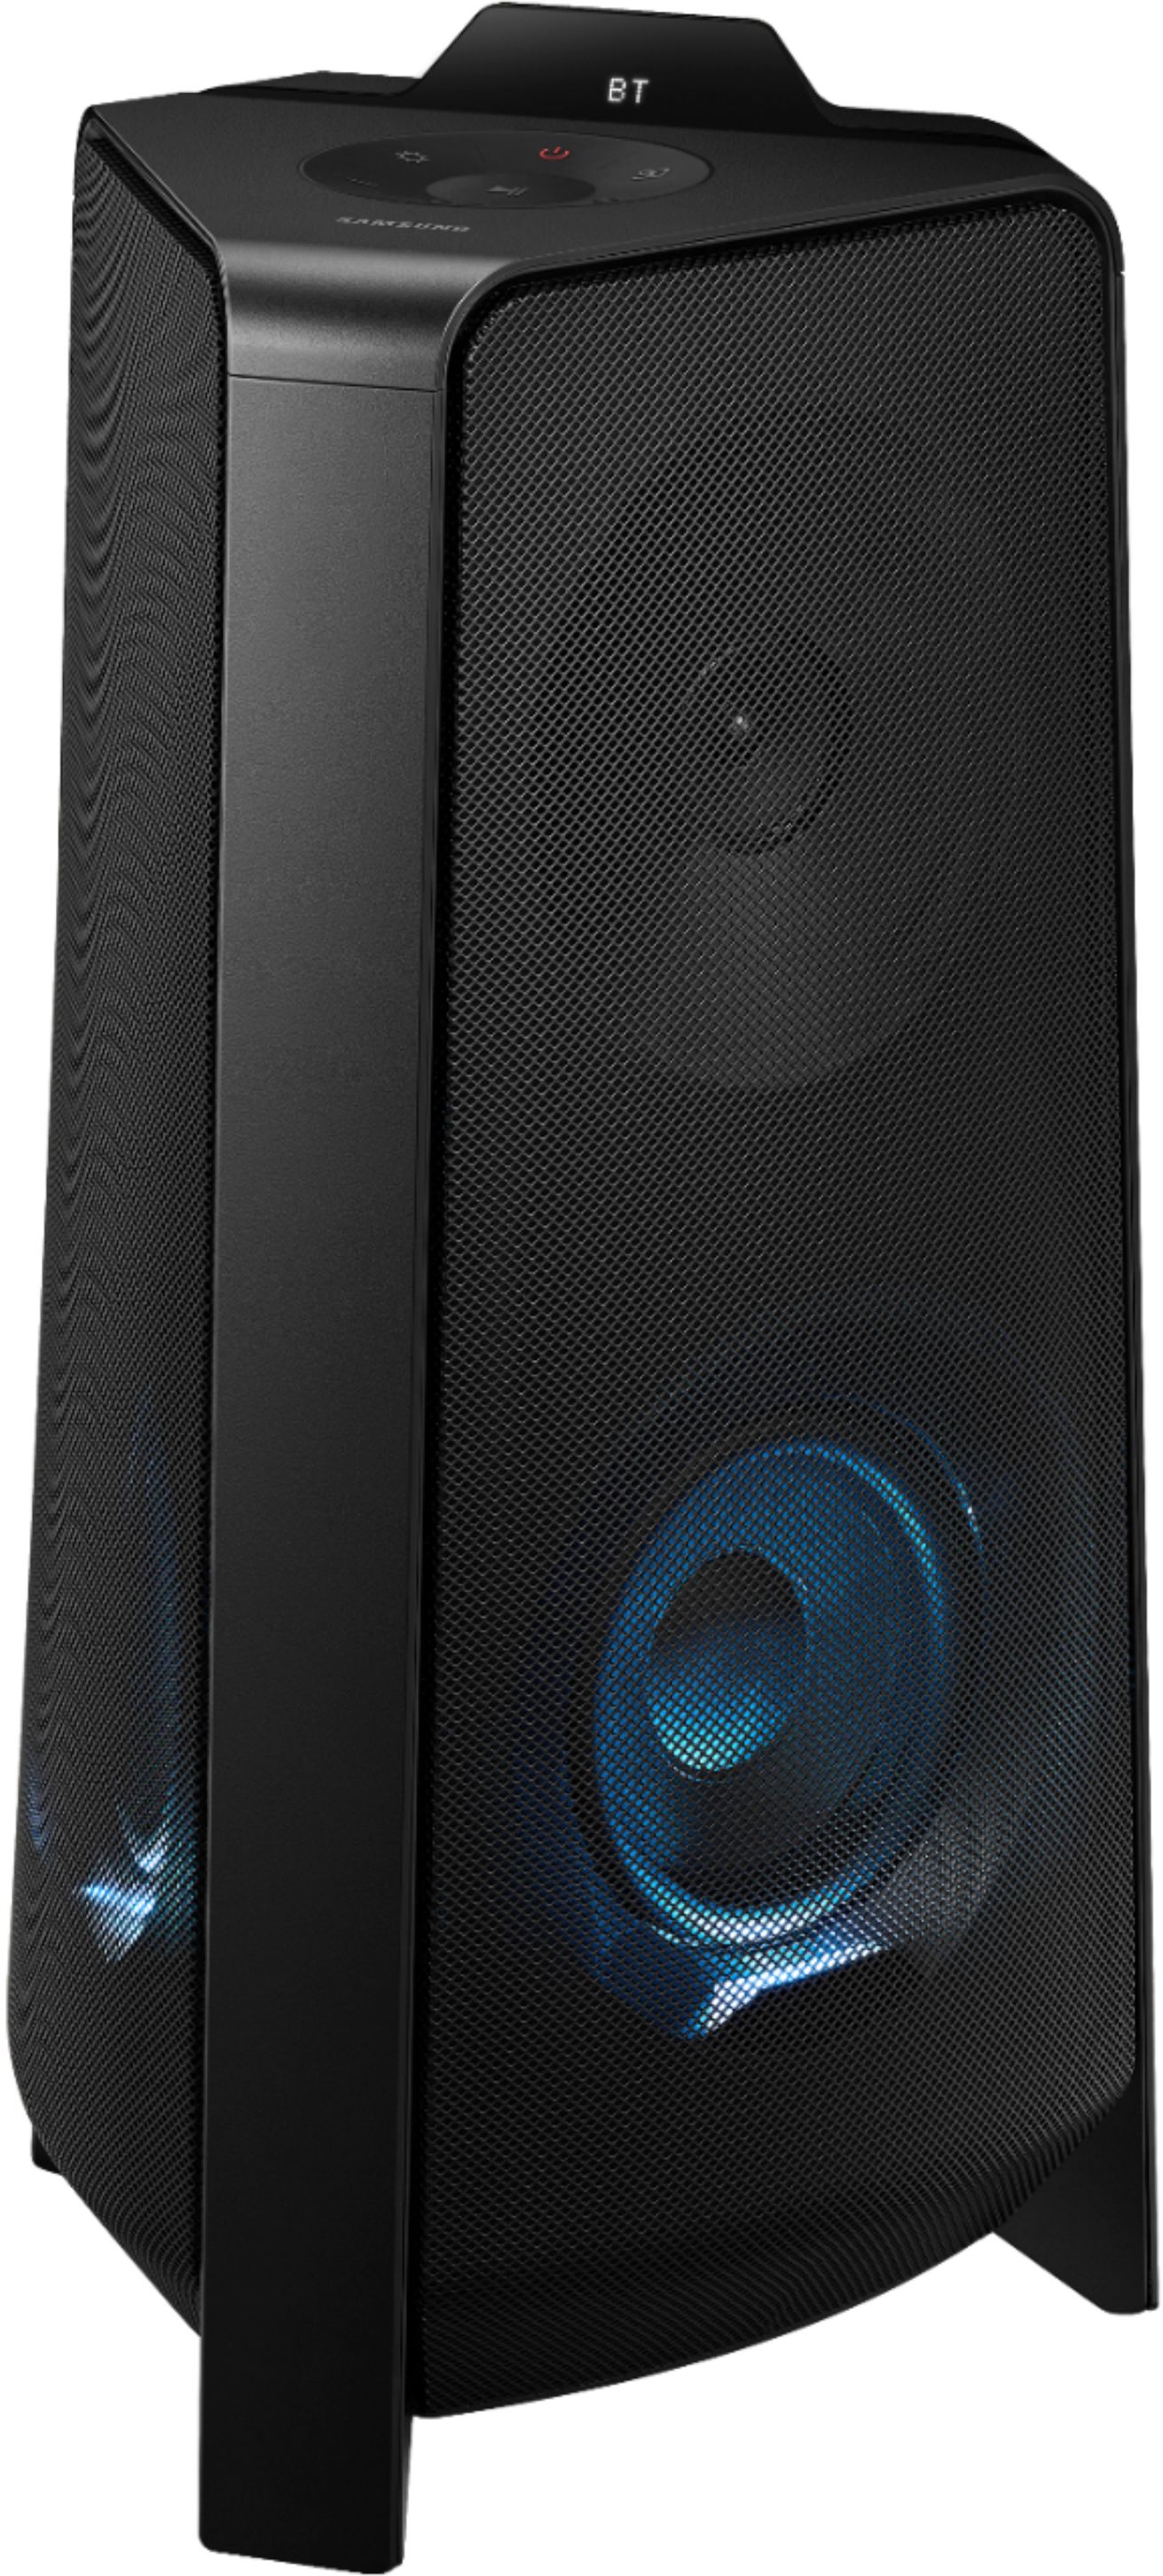 Samsung MX-T50 Sound Tower 500W Wireless Speaker Black MX-T50 